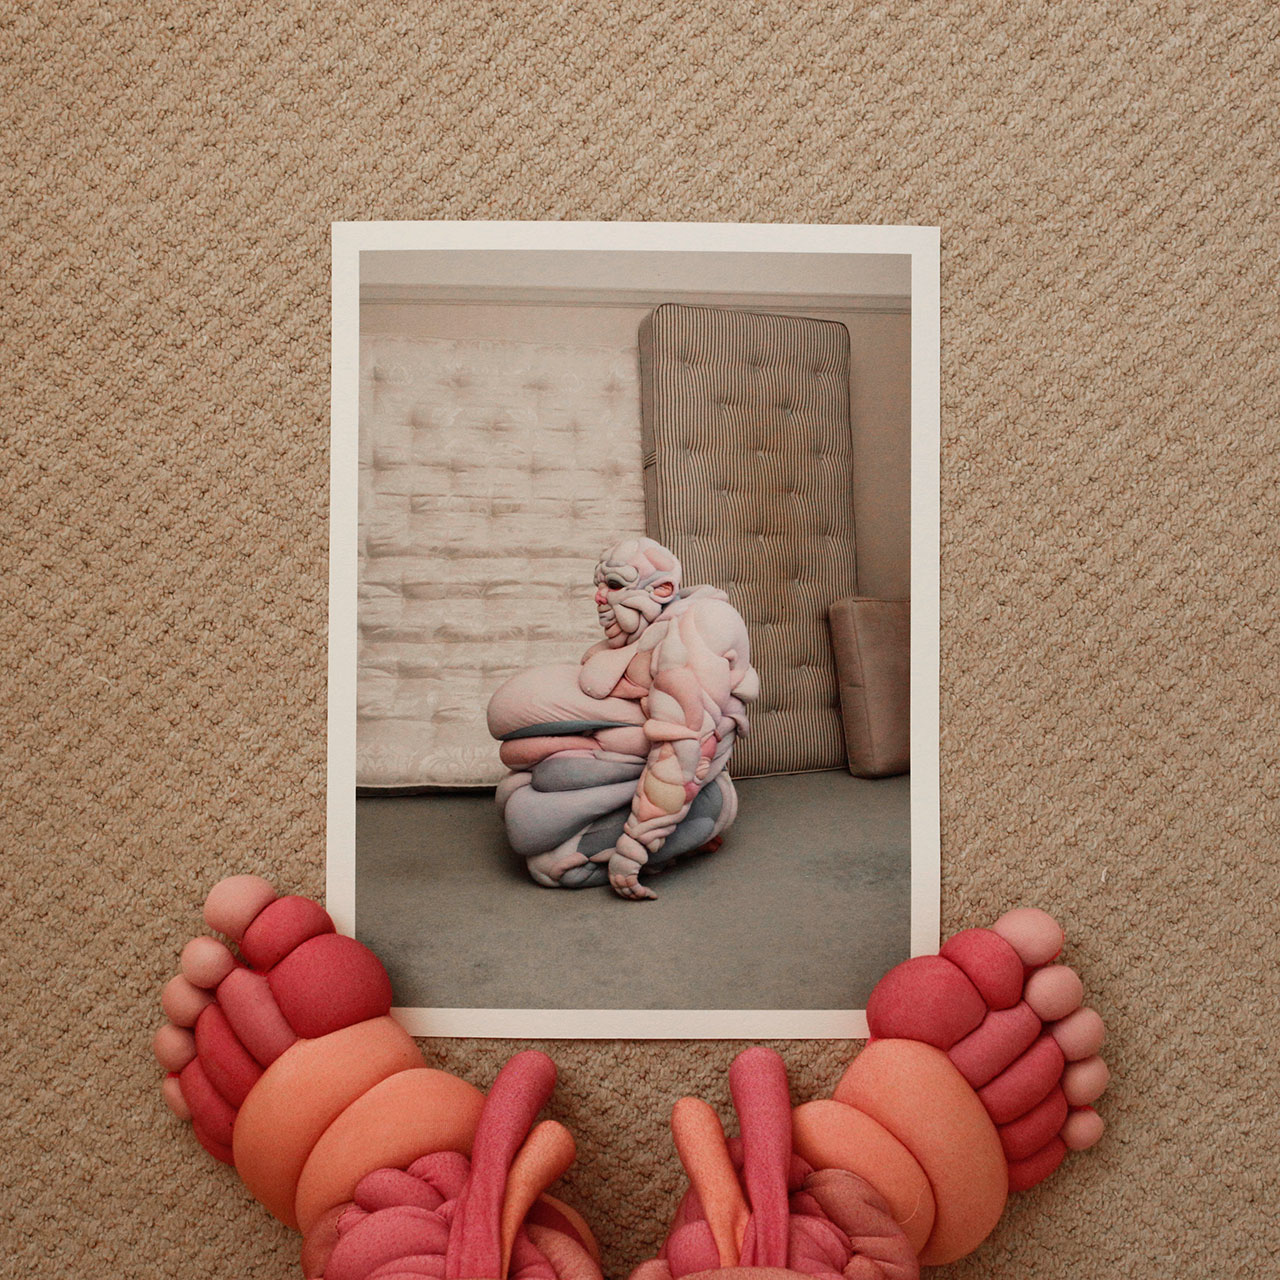 Daisy Collingridge, Hillary's feet on Clive, 2019. Photo by Daisy Collingridge.